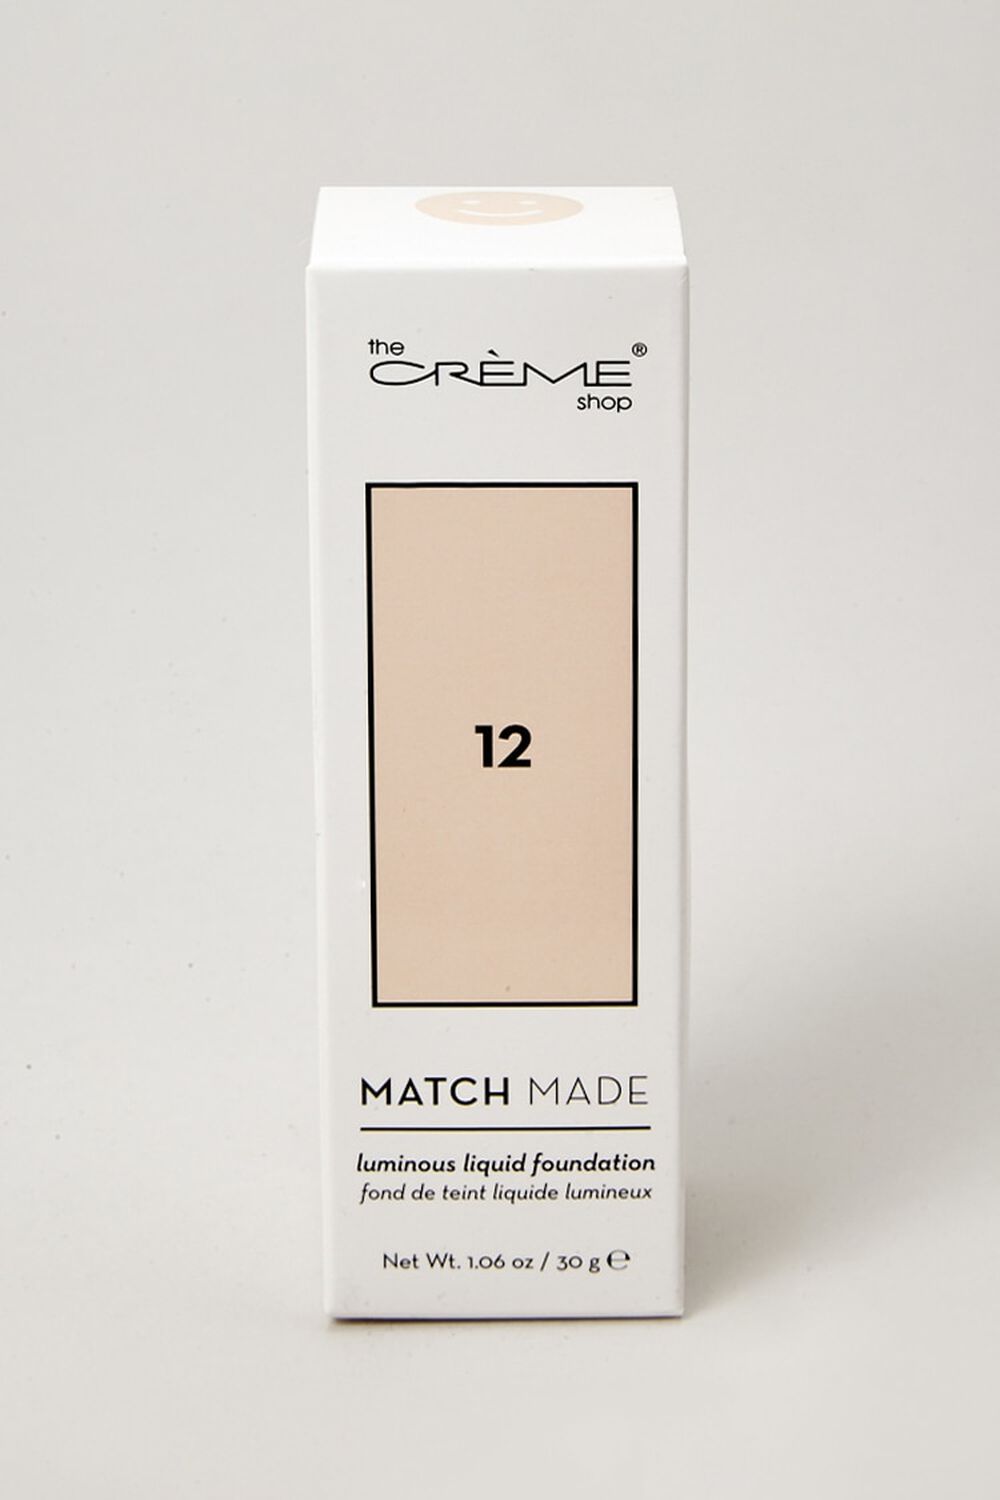 The Crème Shop Match Made Luminous Liquid Foundation, image 3